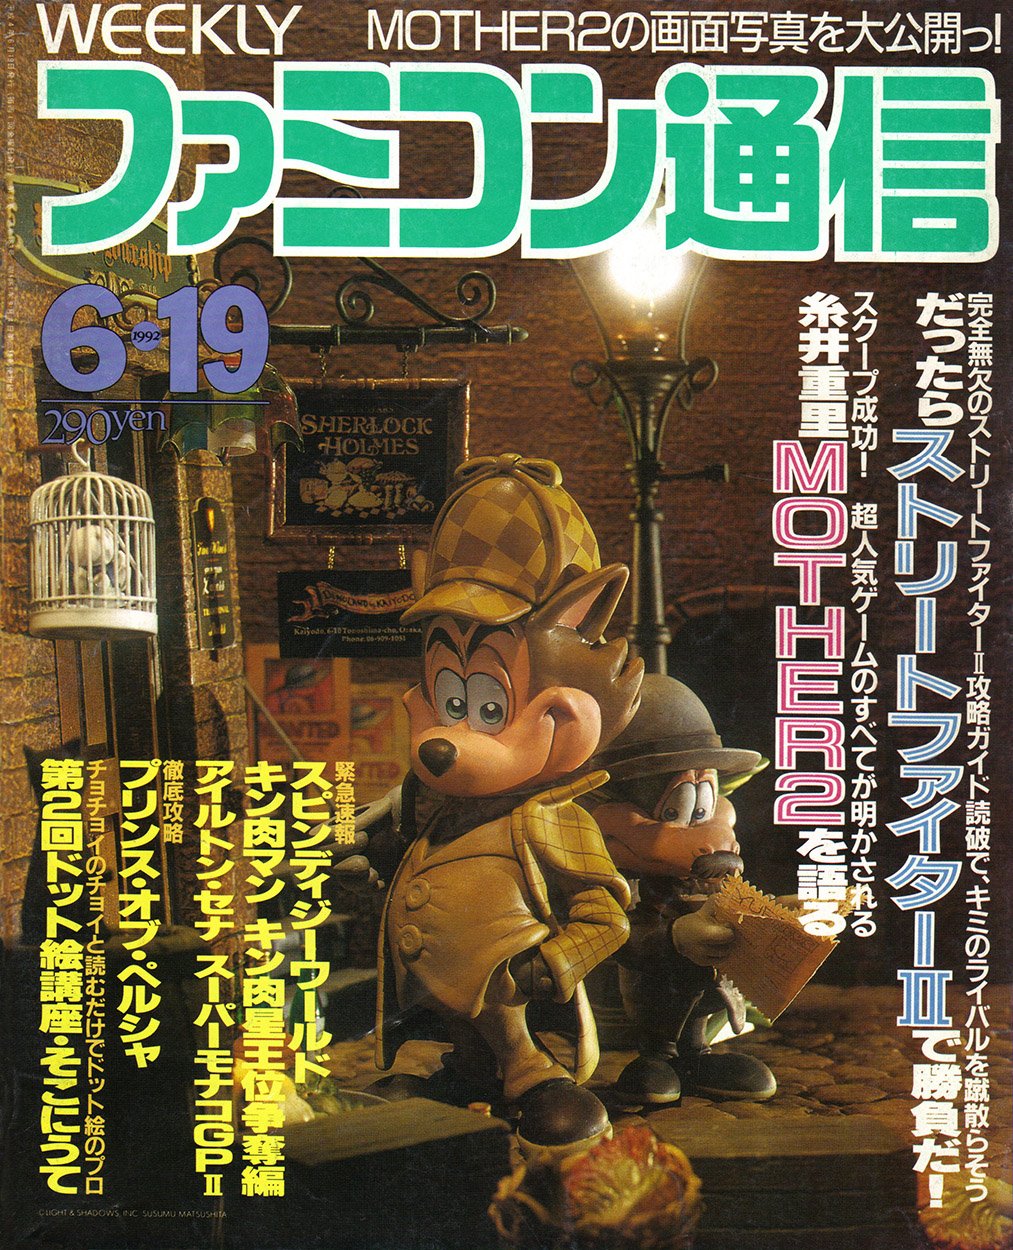 Famitsu Video Game Magazines Page 8 Retromags Community